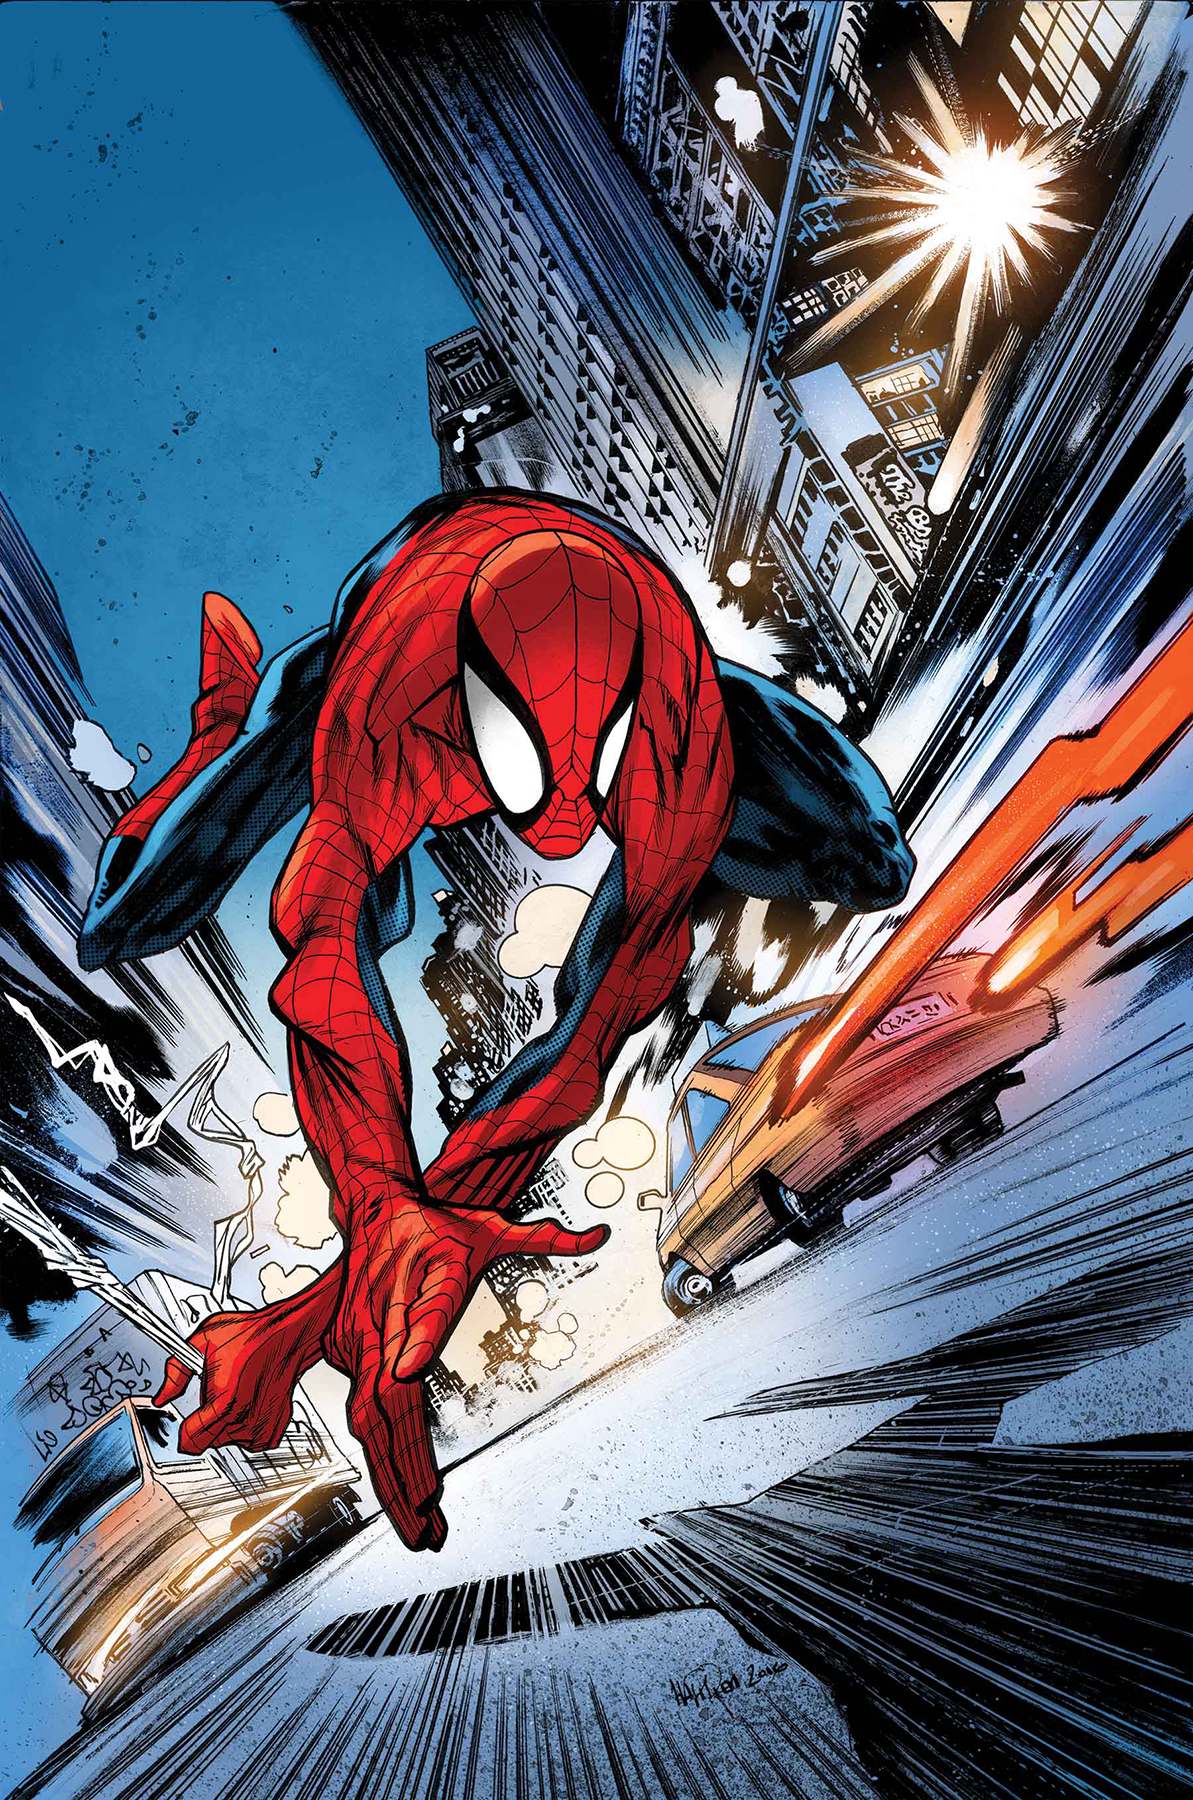 D483 PETER PARKER SPECTACULAR SPIDER-MAN #297 contains a Marvel Value Stamp 